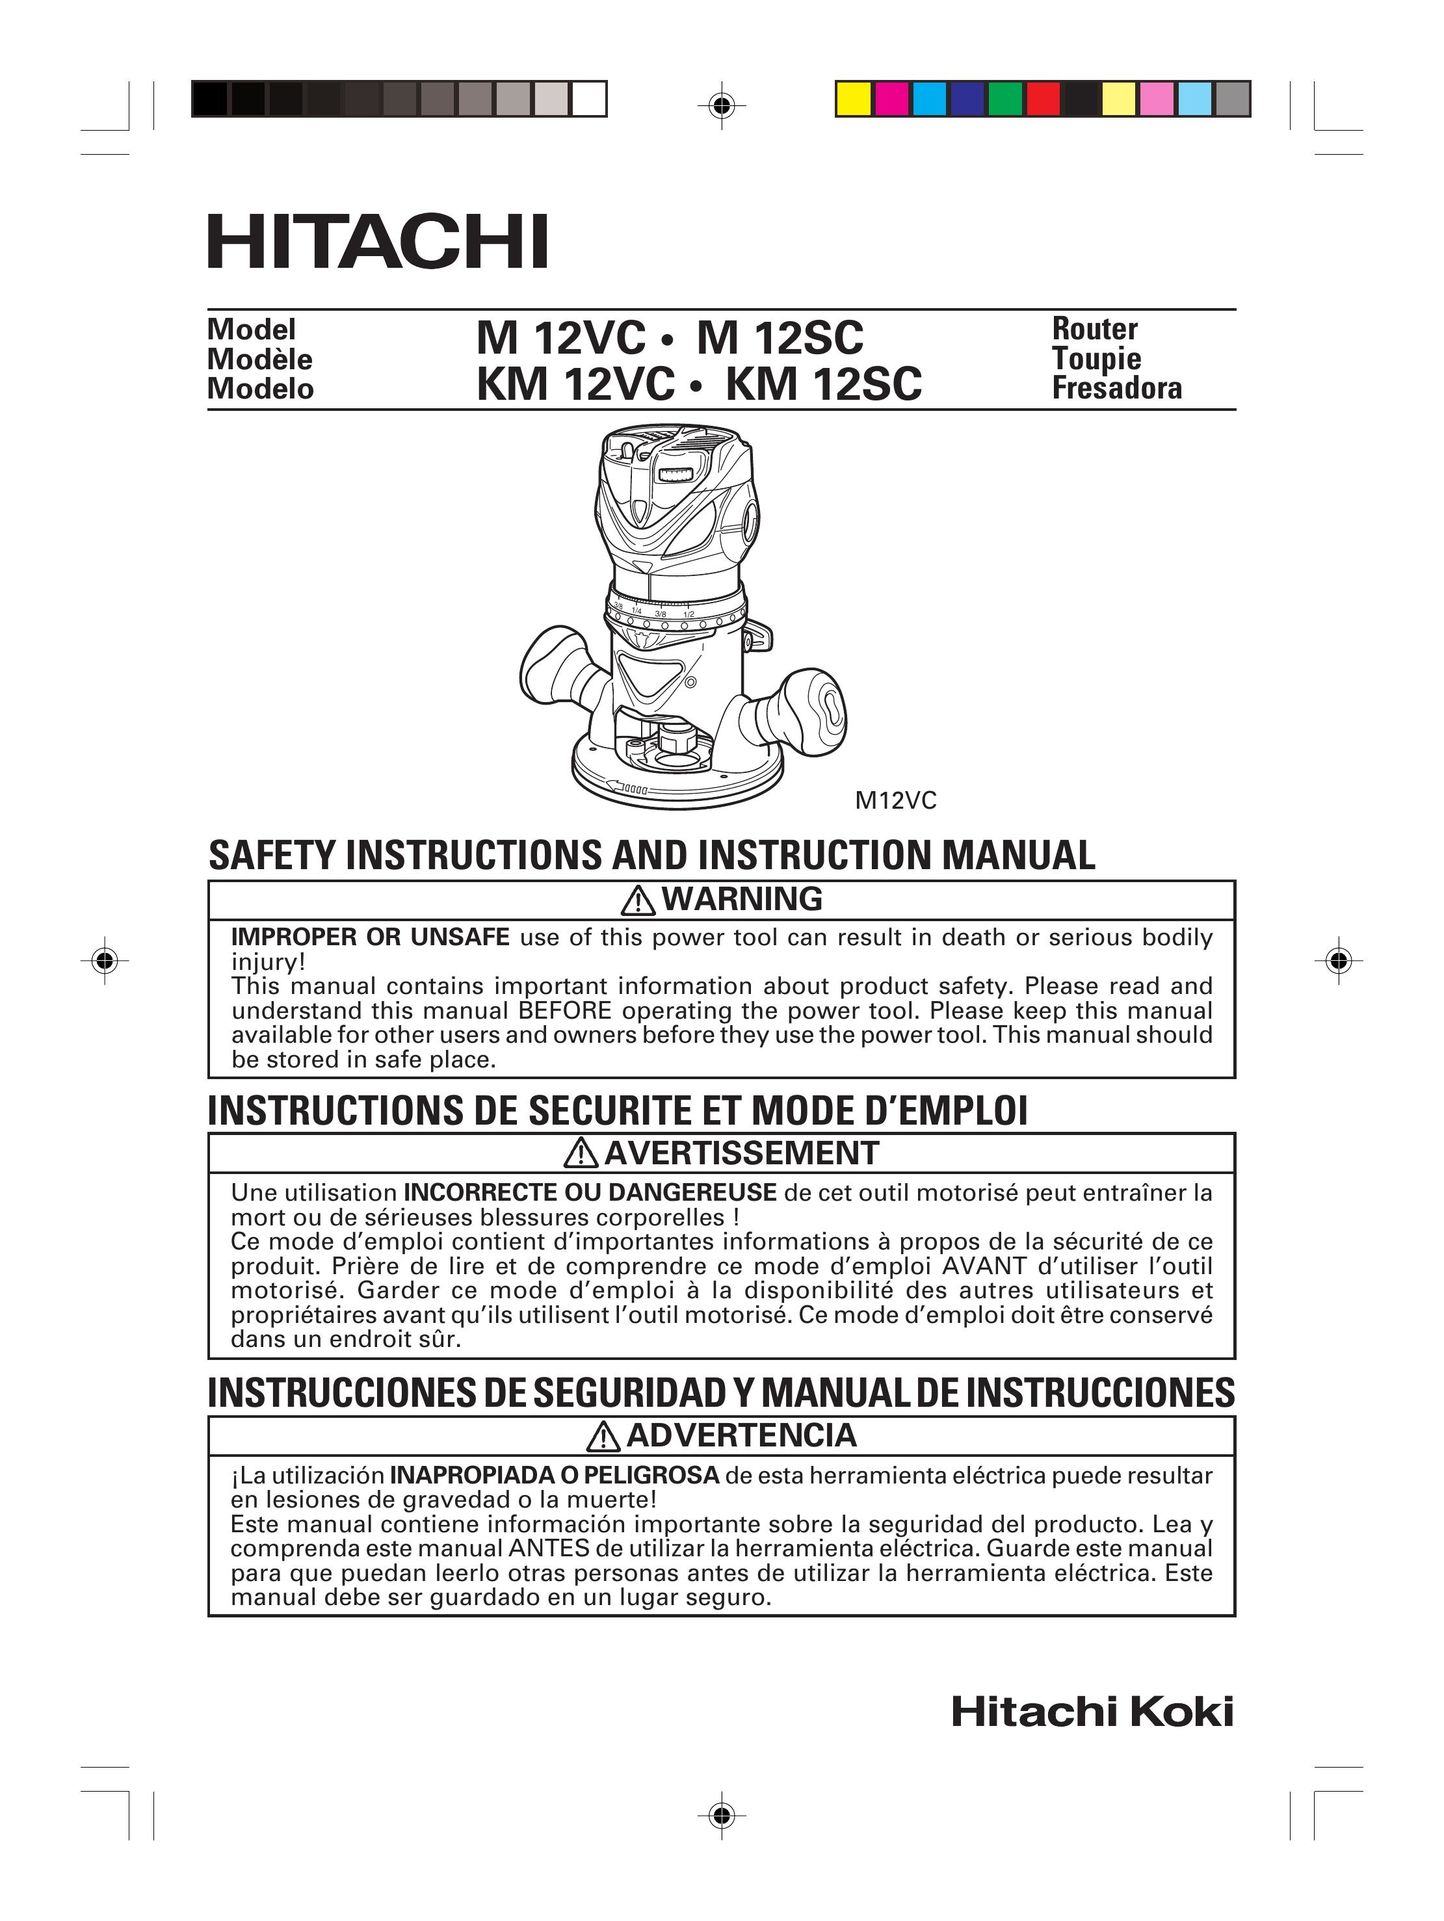 Hitachi KM 12SC Router User Manual